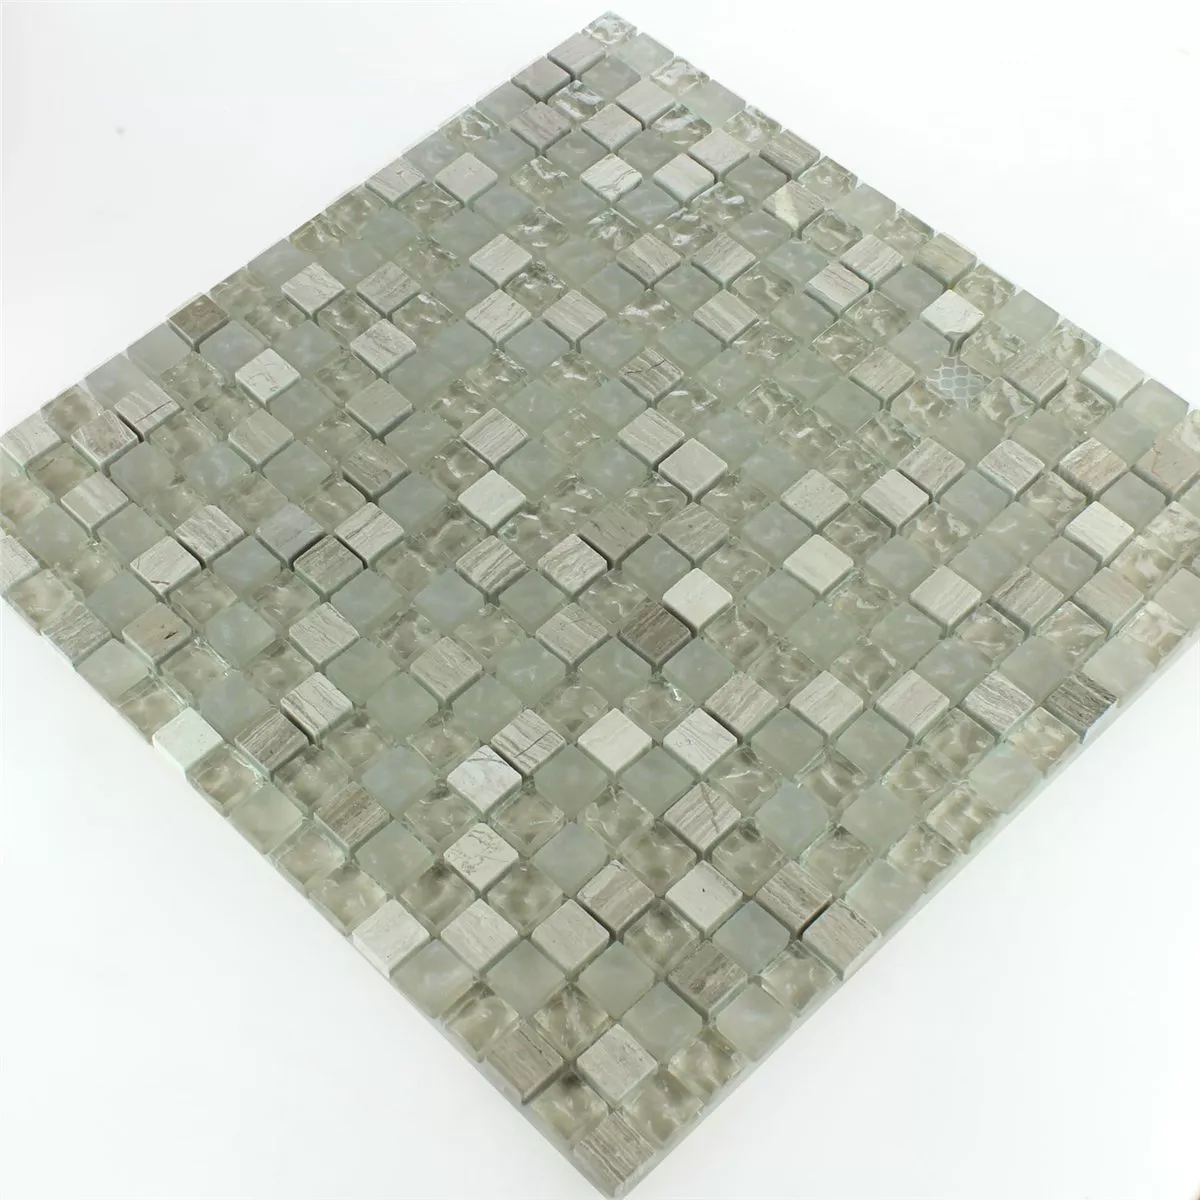 Sample Mosaic Tiles Glass Marble Burlywood Drummed